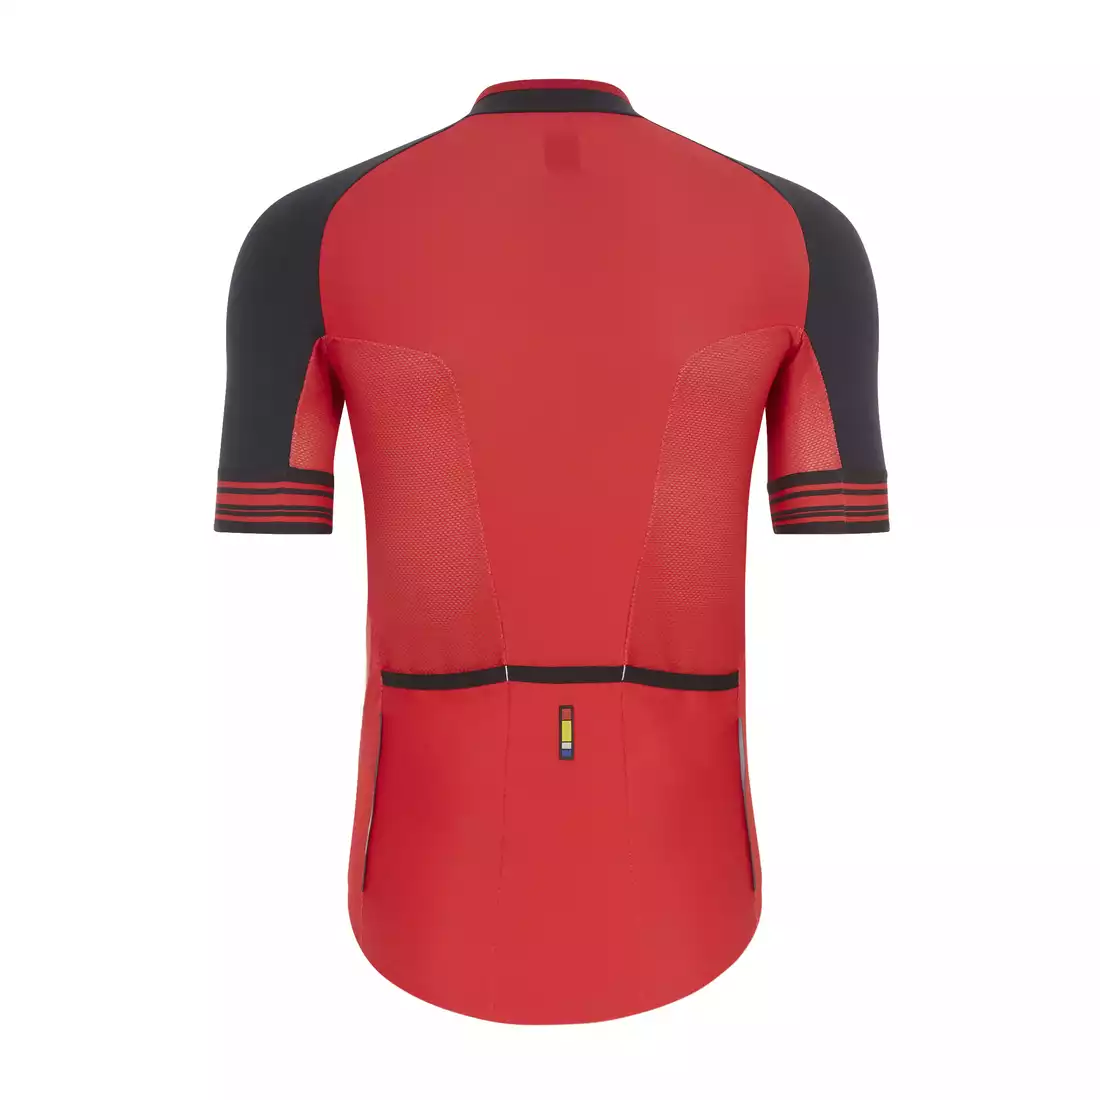 LOOK ULTRA koszulka rowerowa czerwona 00015344 